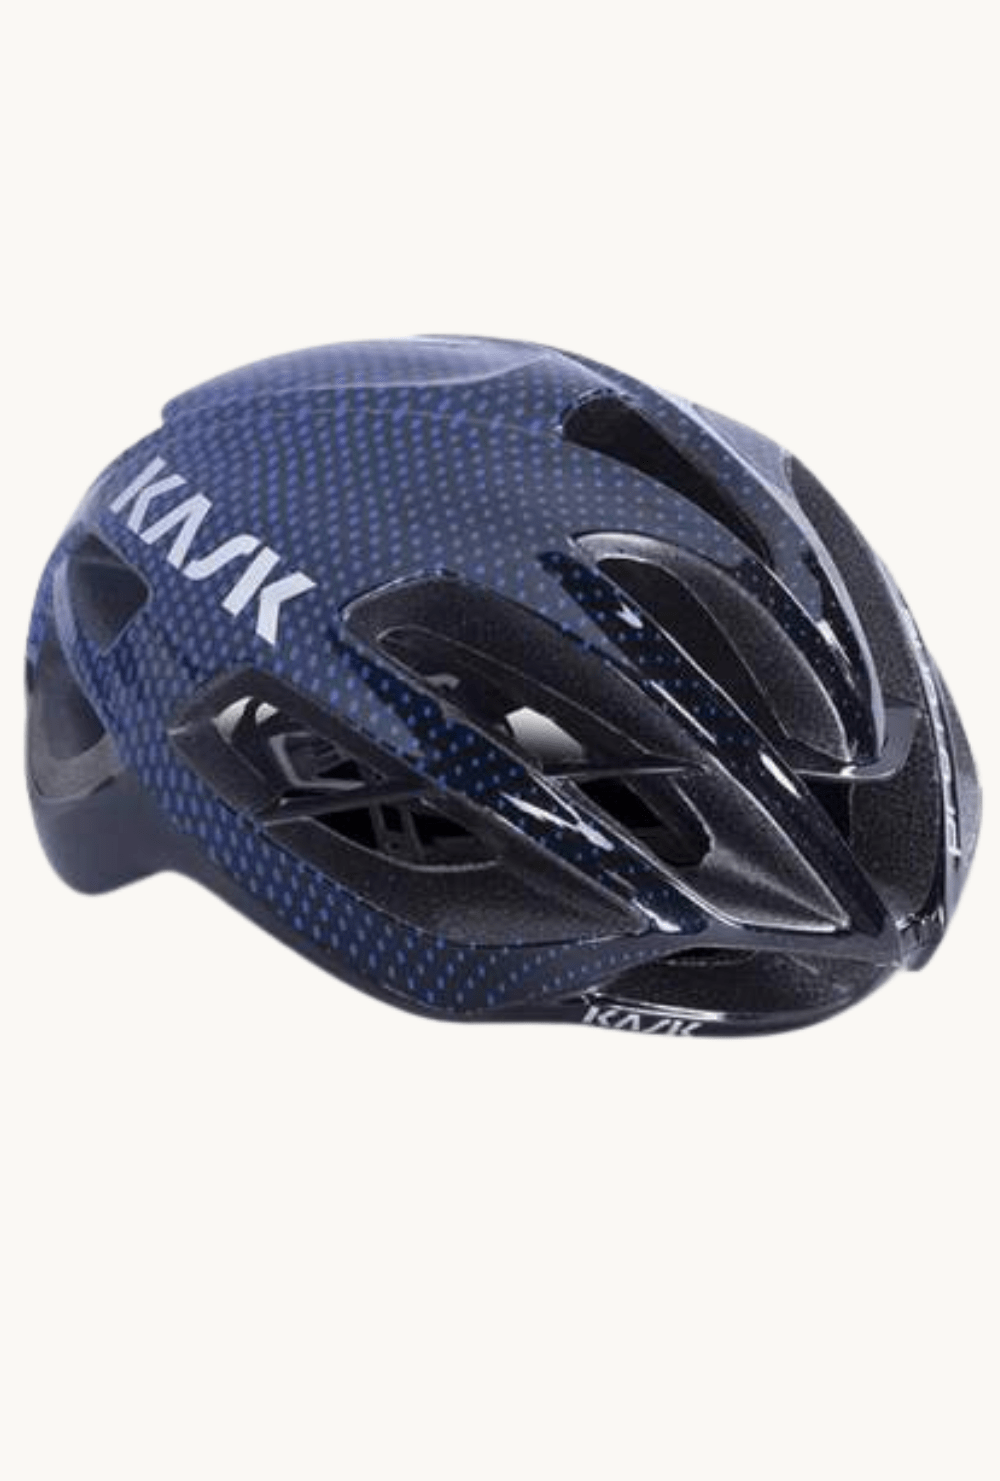 Helmet - Kask Protone Dotted Bluemedium (52-58cm) / Dotted Blue